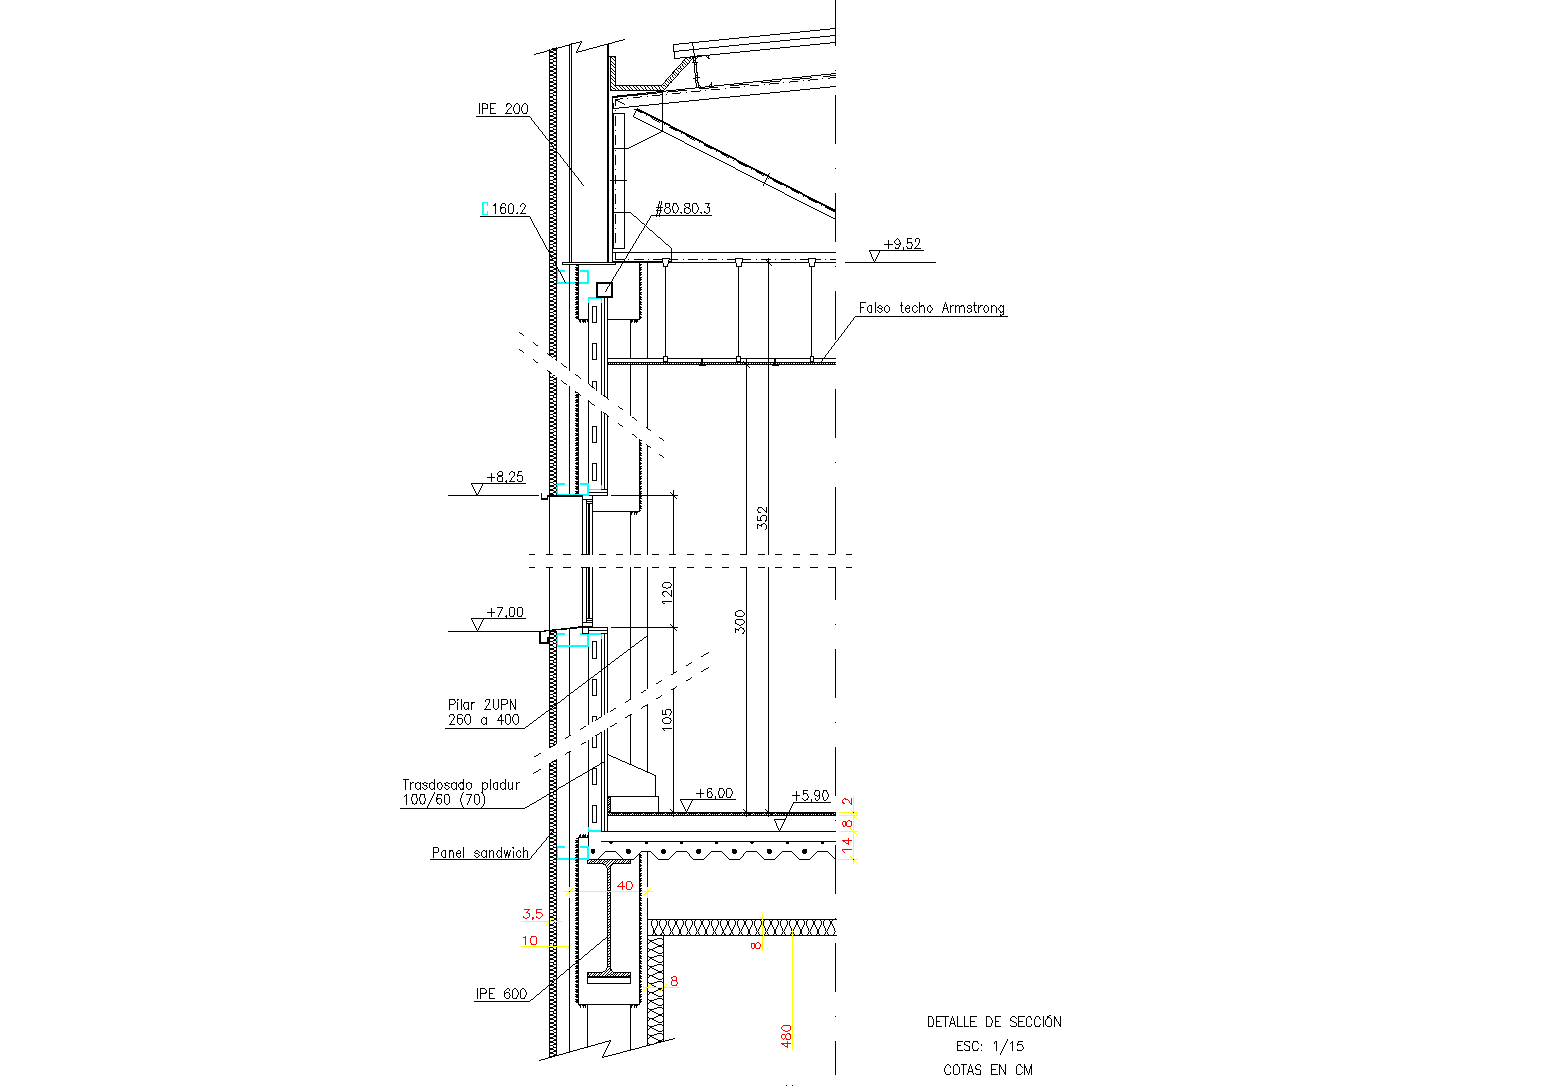 Section façade in frozen place plan detail dwg. - Cadbull